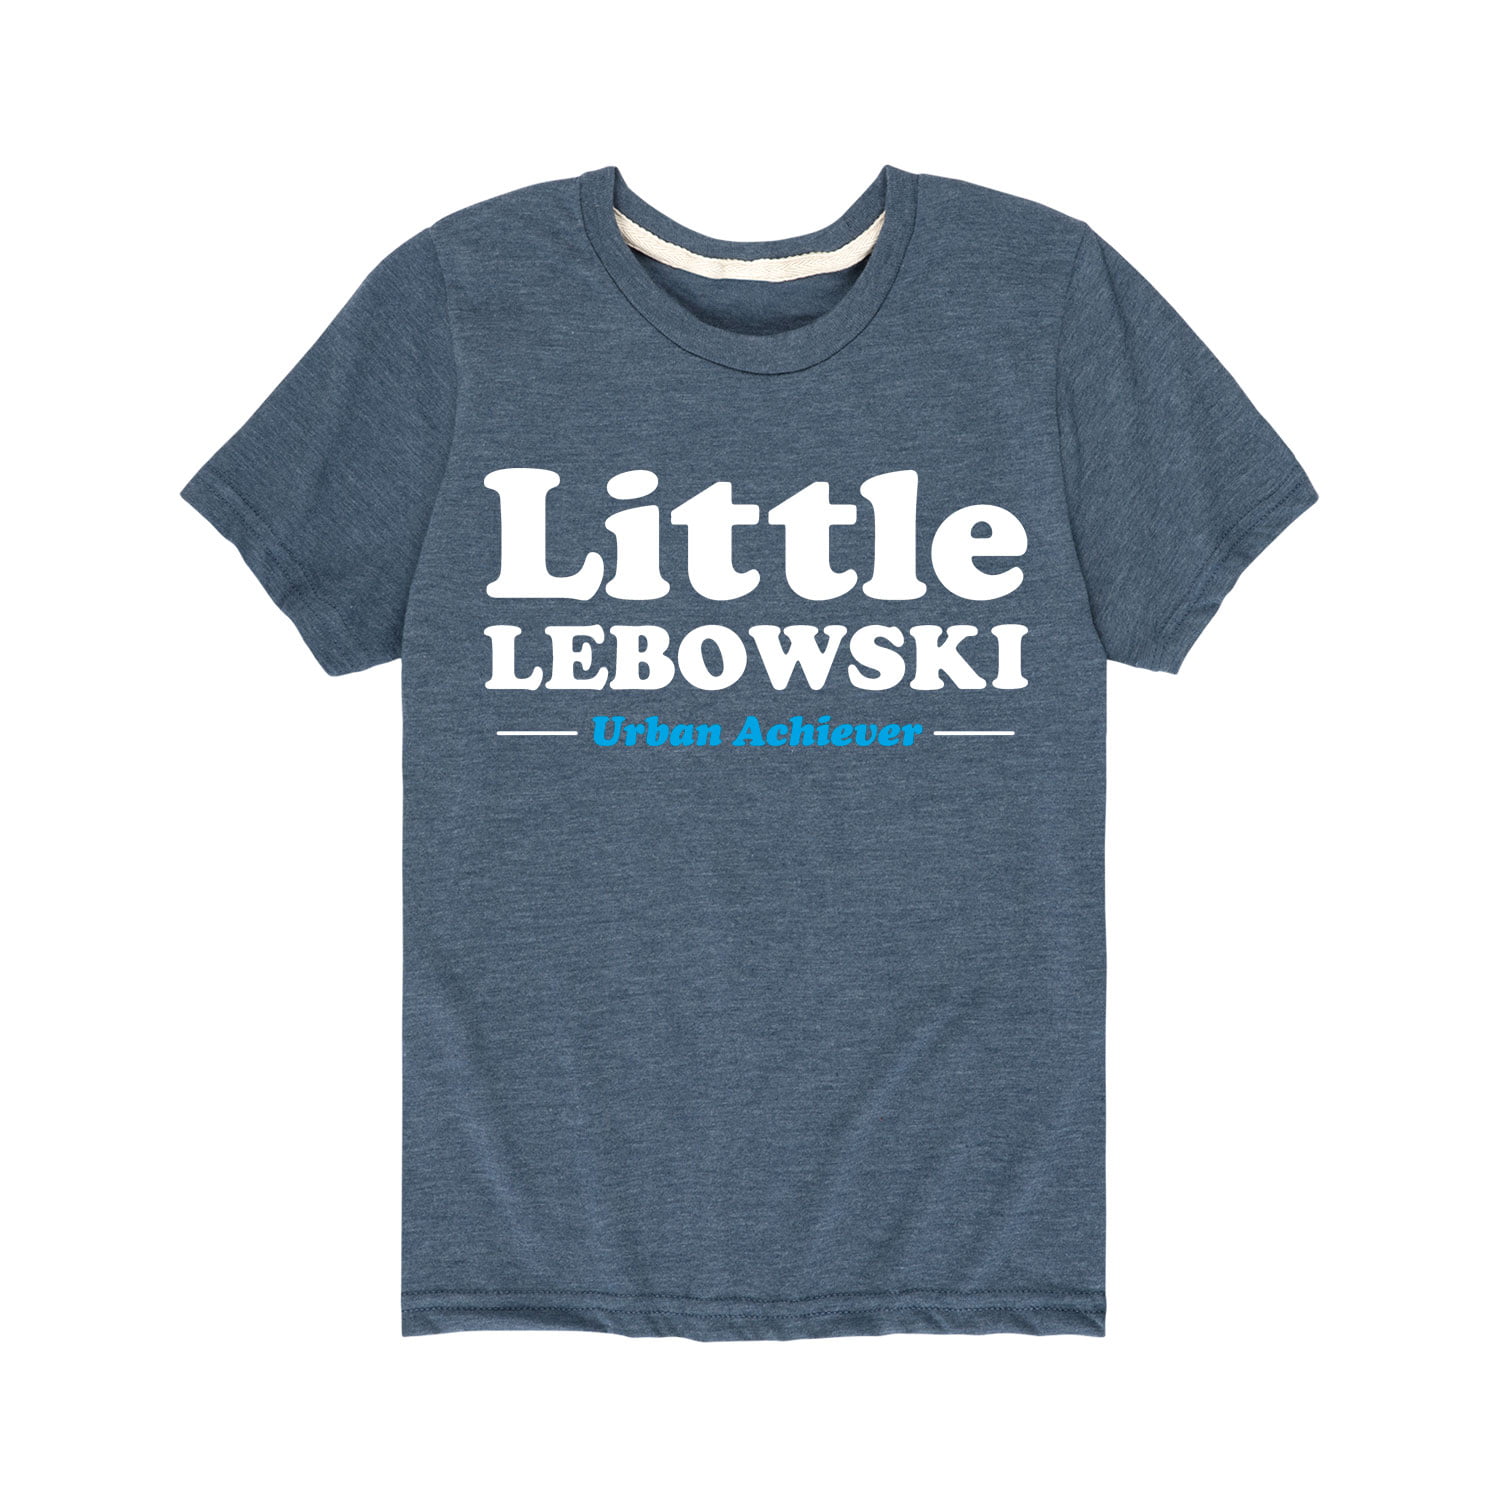 Message little. Little Lebowski Urban Achievers. Urban Achievers Lebowski Shirt. Urban Achievers Shirt.